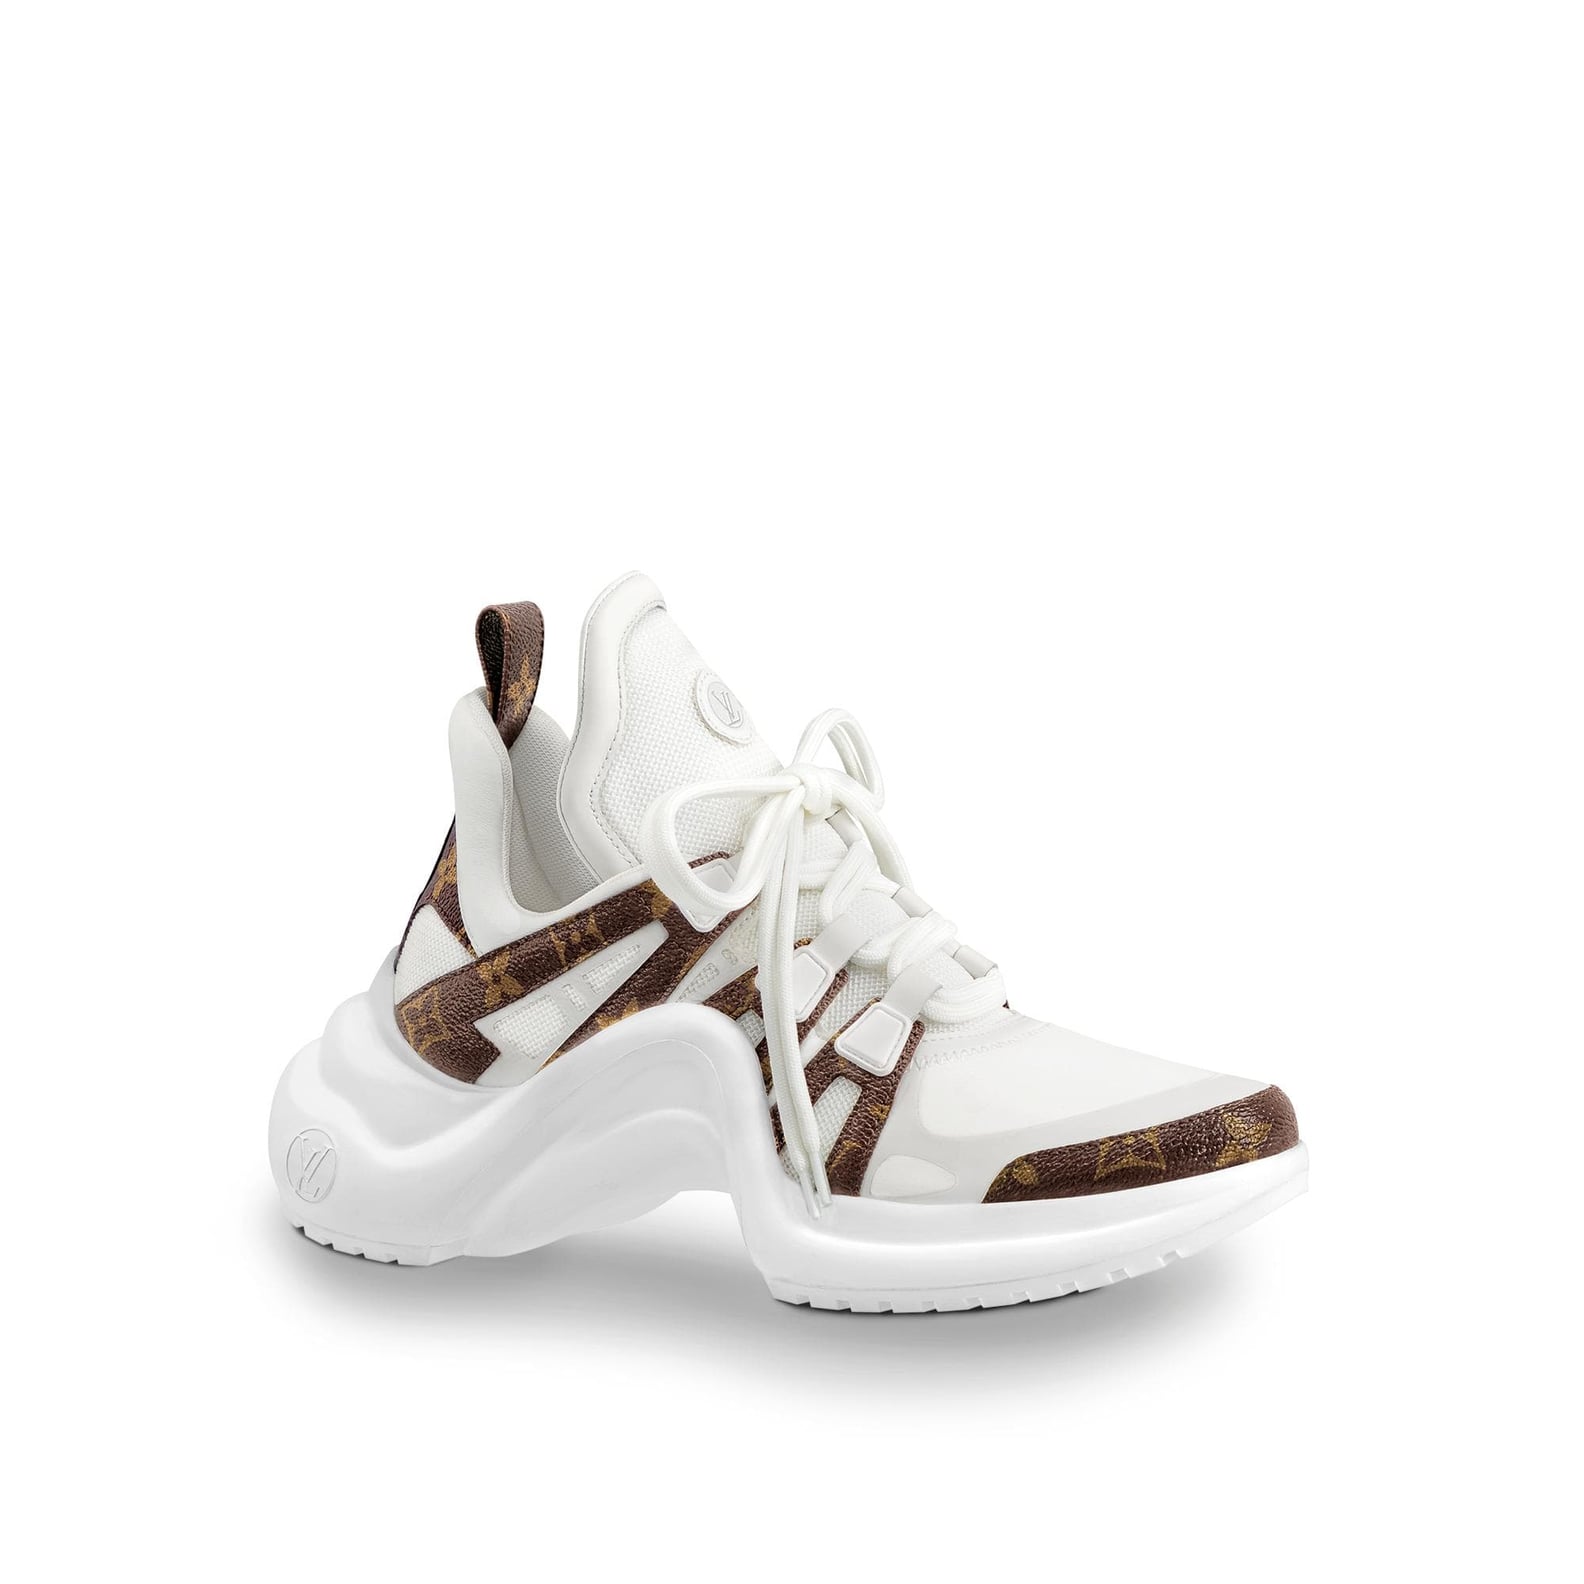 Hailey Baldwin Louis Vuitton Sneakers | POPSUGAR Fashion